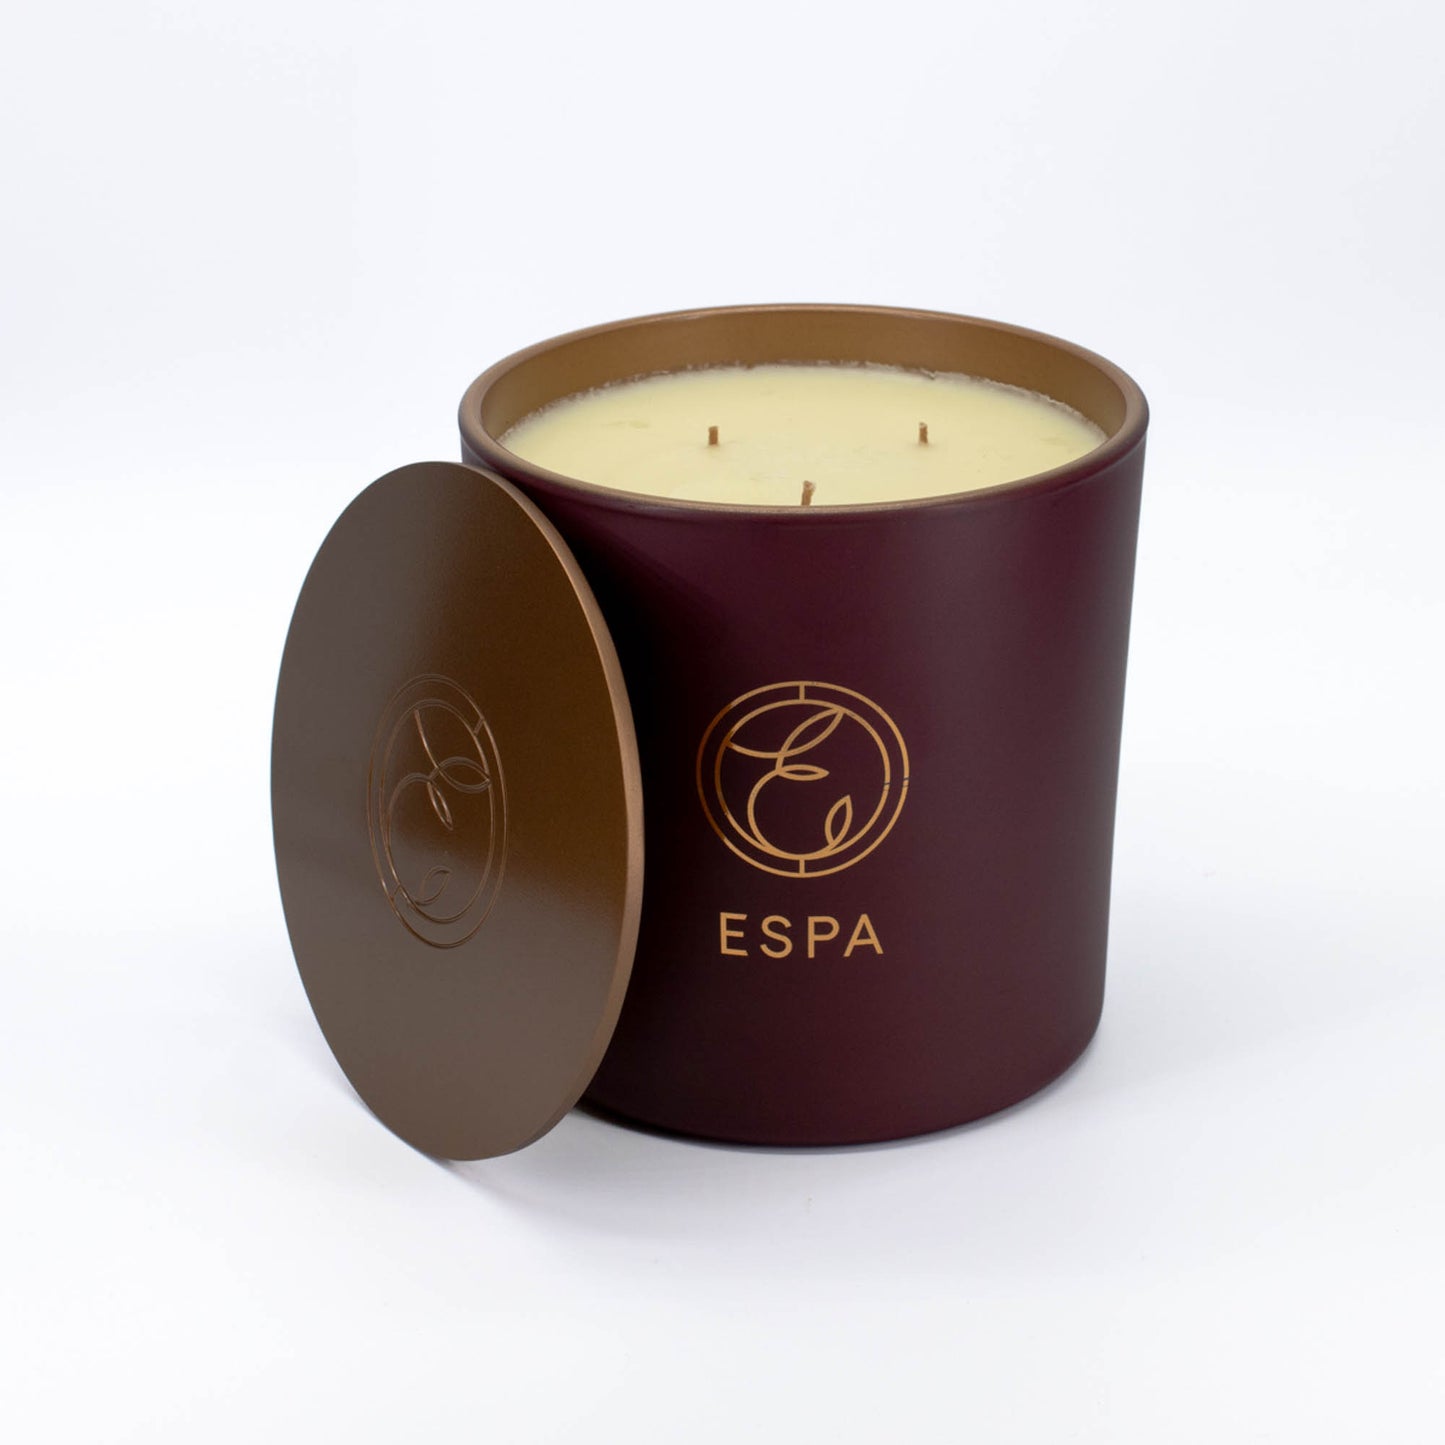 ESPA 3-Wick Scented Candle WINTER SPICE 35.3oz - Imperfect Box